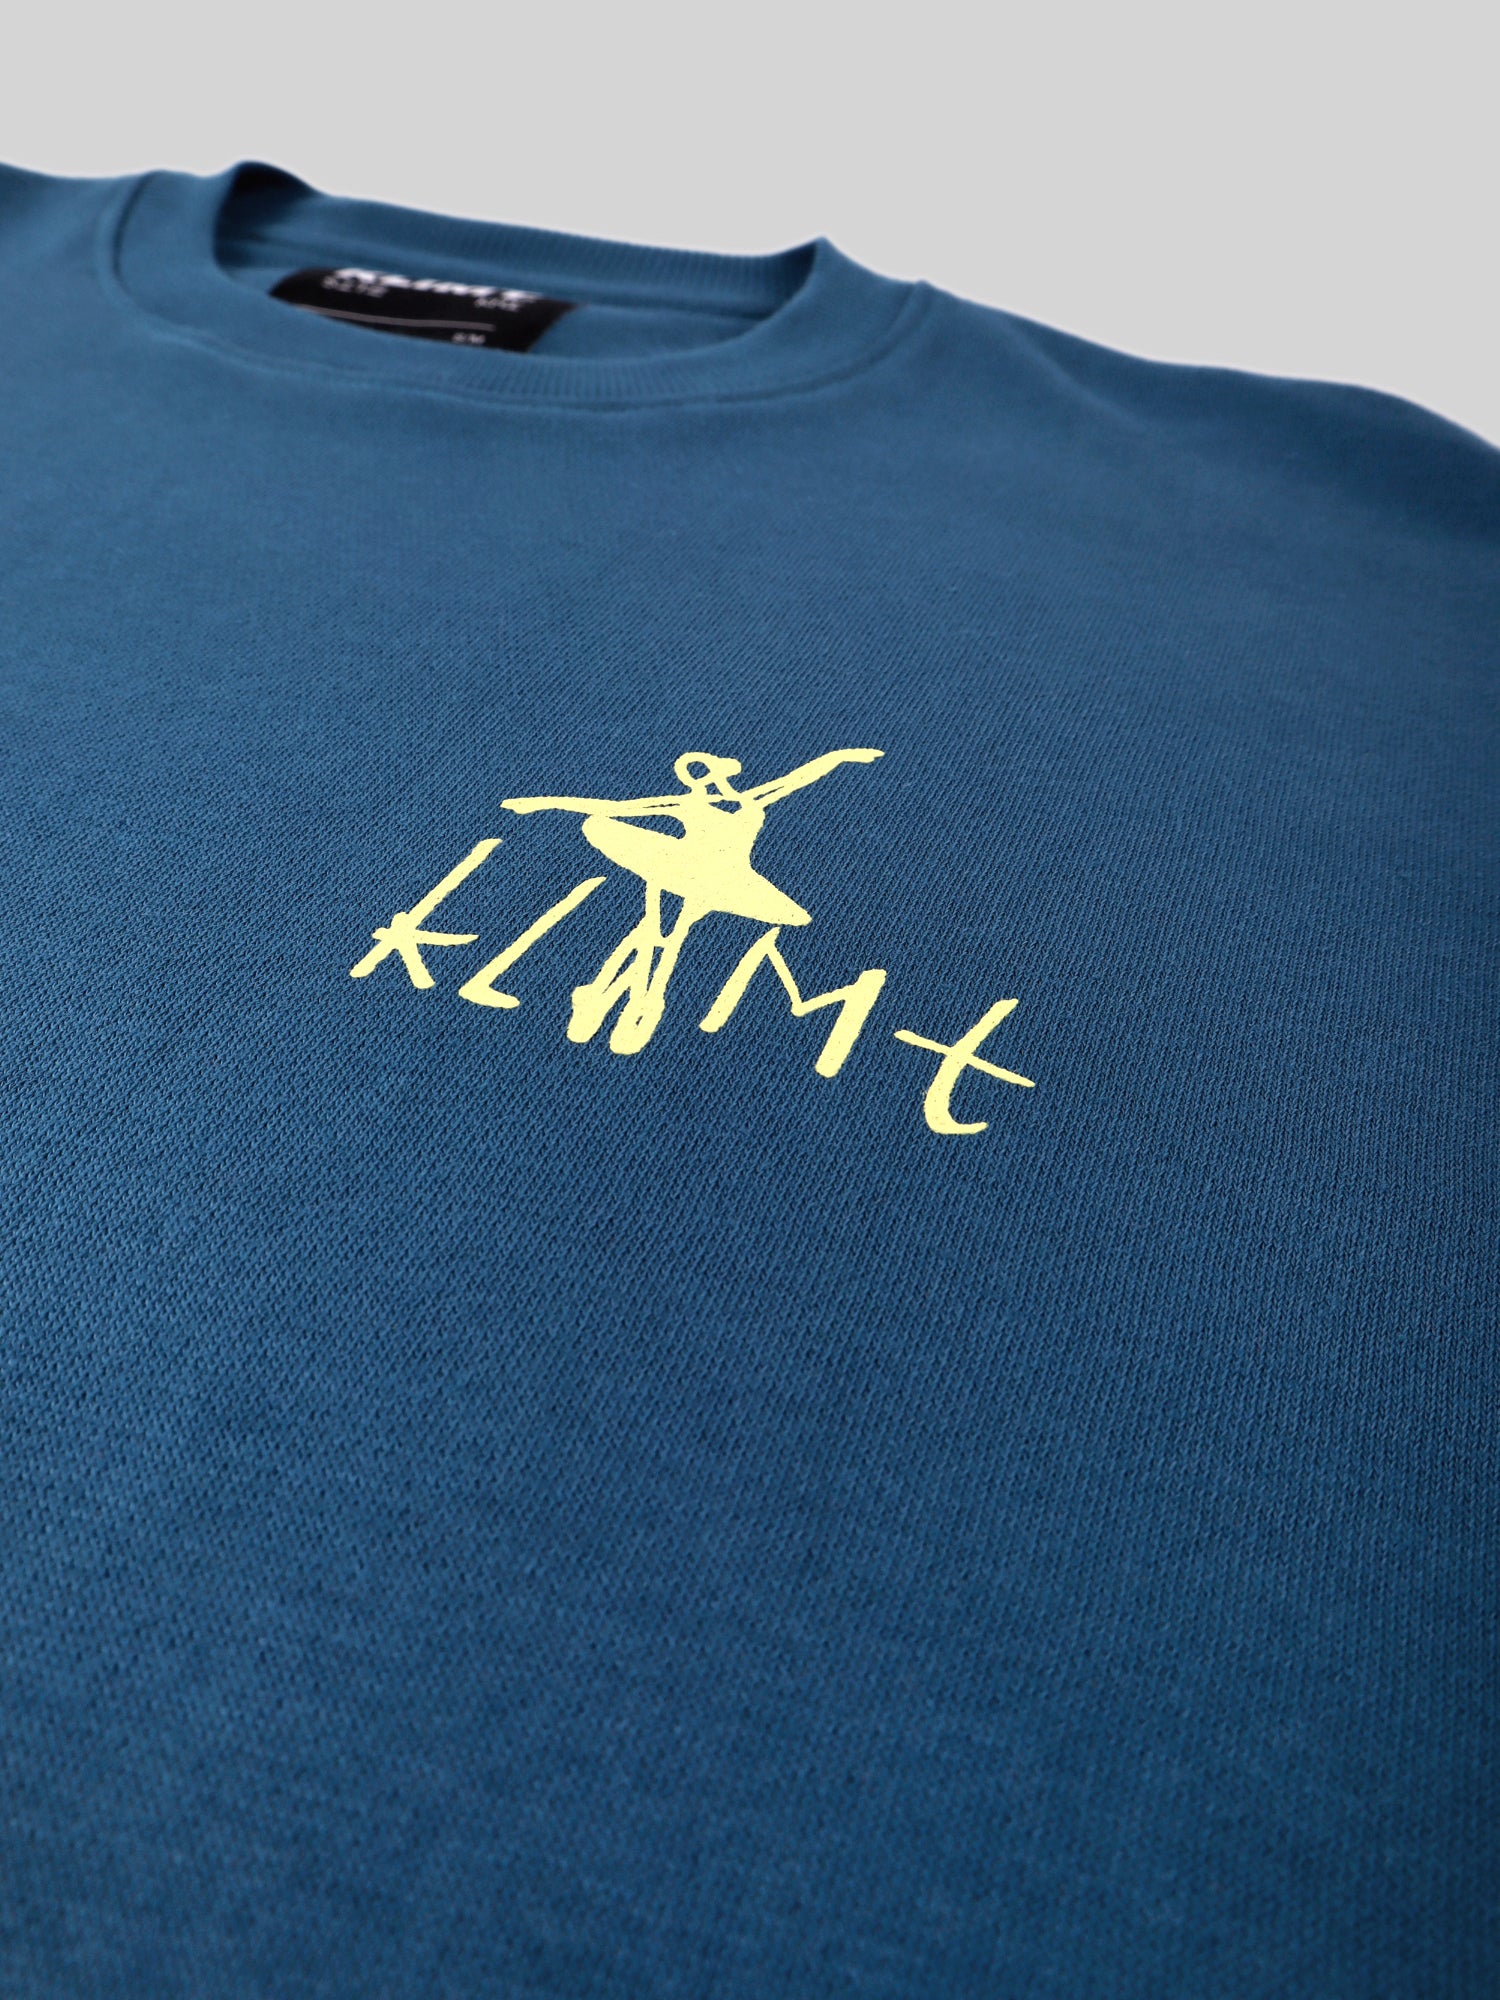 Klimt Ballet - Heavy GSM Tshirt